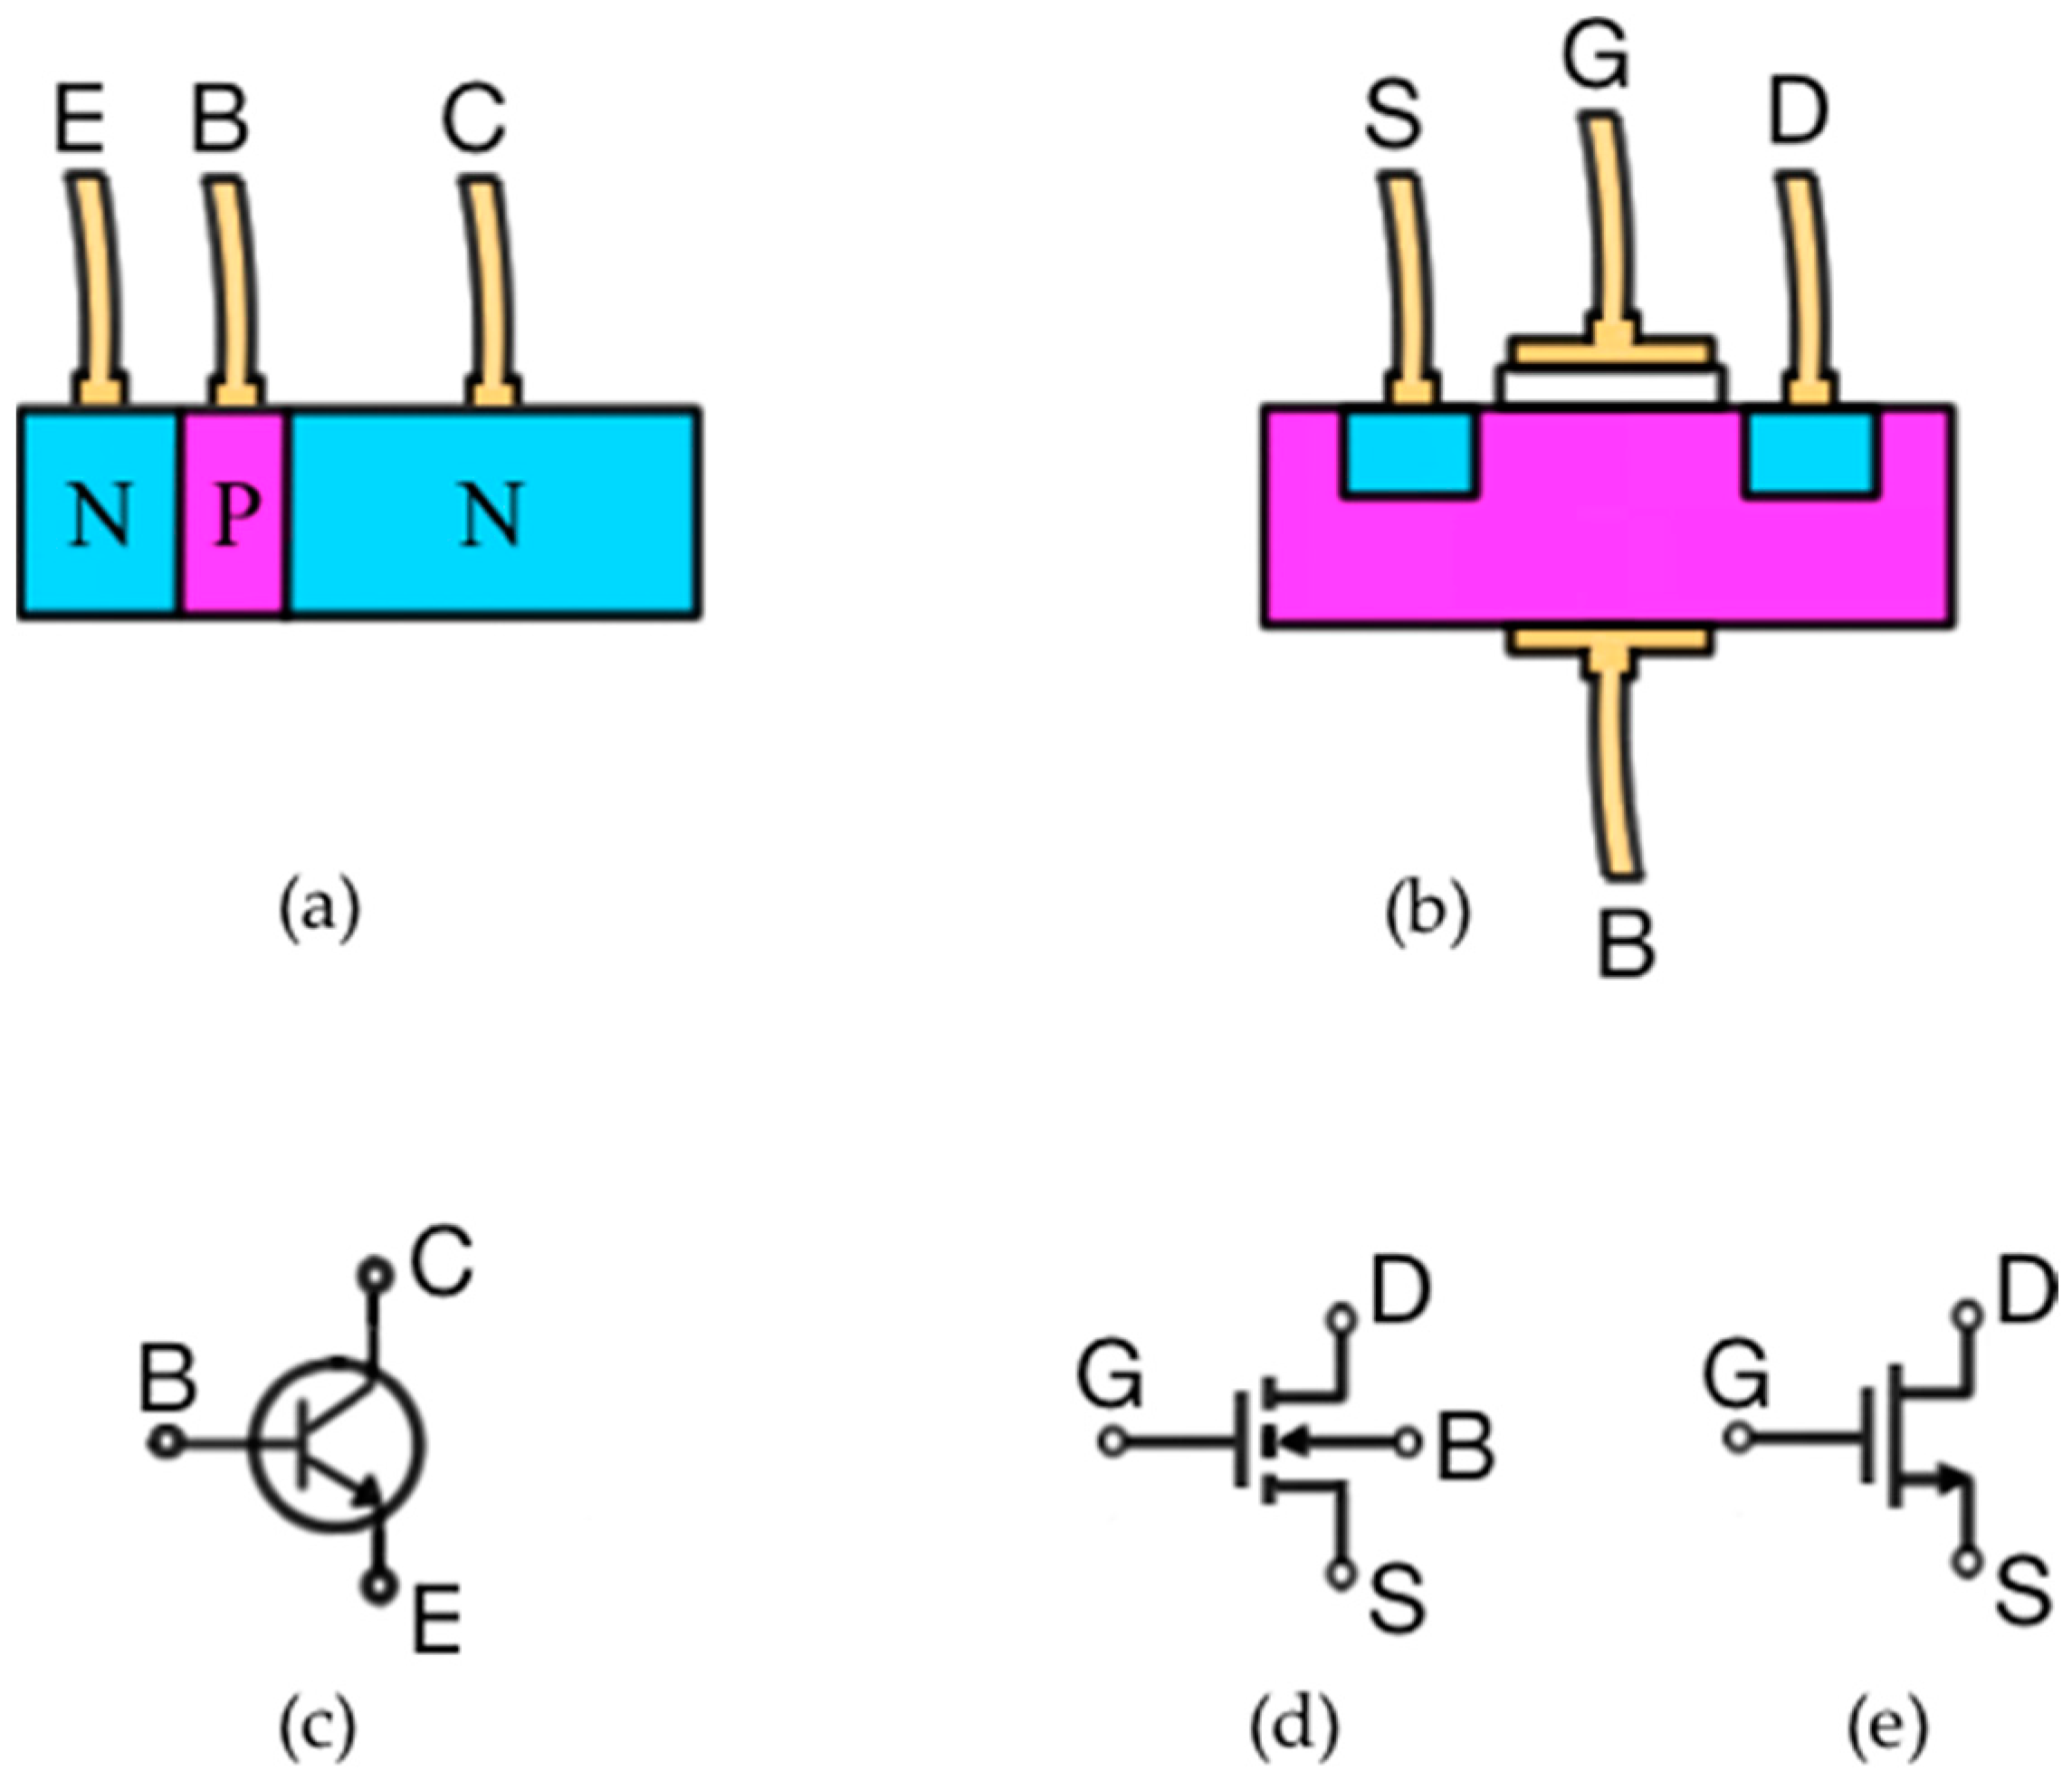 Transistor computer - Wikipedia